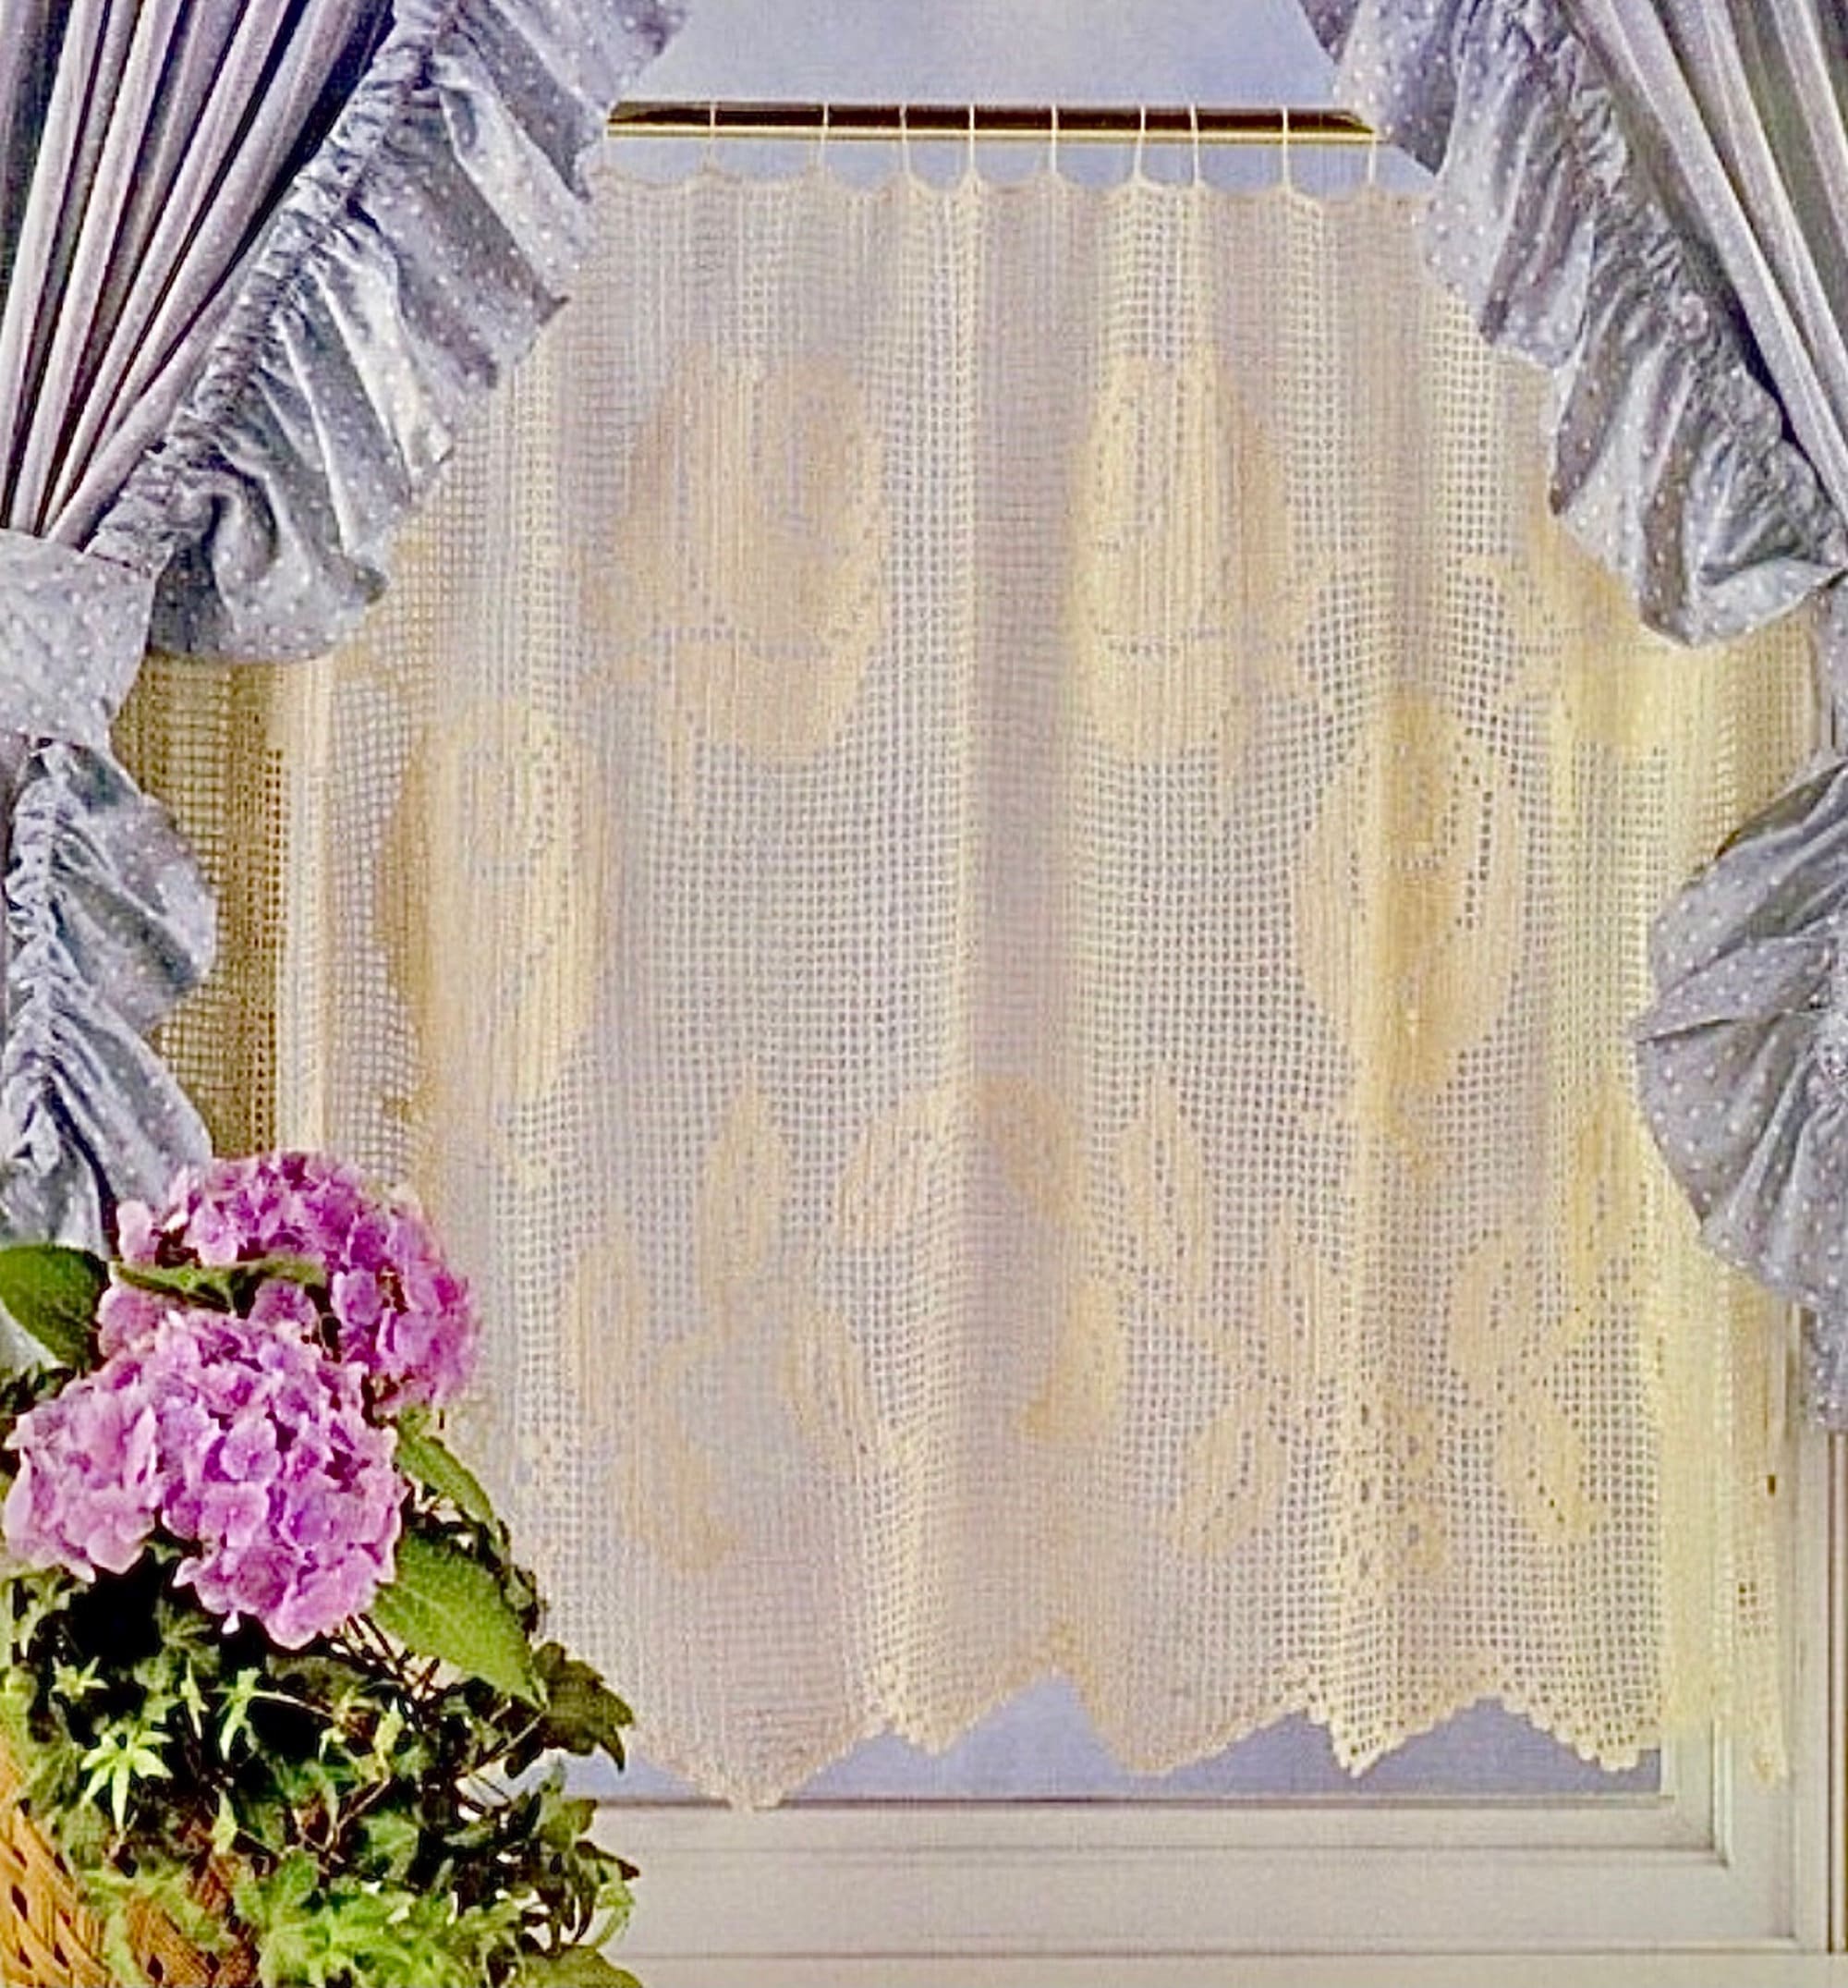 Crochet Cafe Curtain Starry Night Childs Room Nursery Decor. Kitchen Decor  Pdf Pattern 